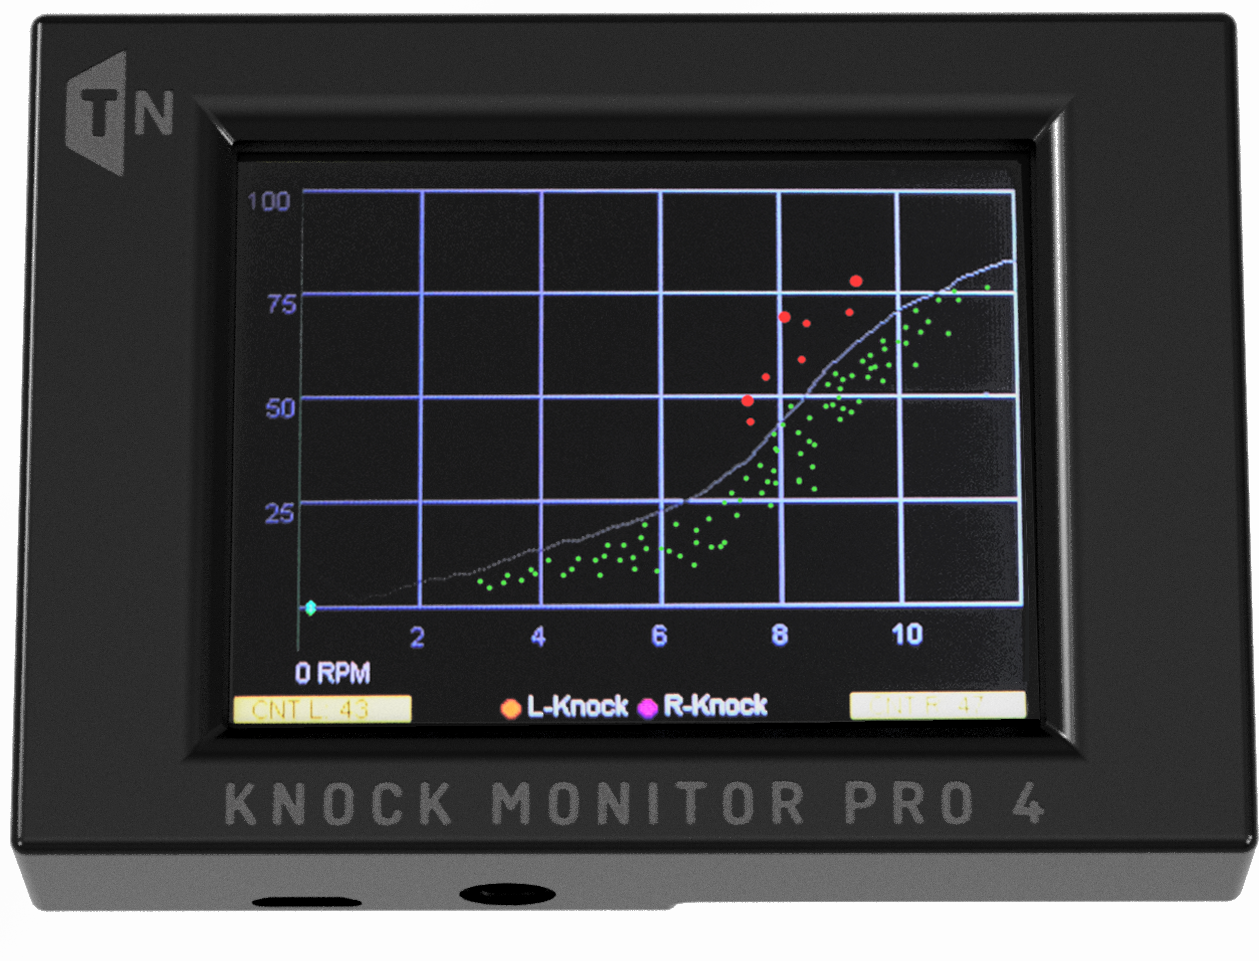 Knock Monitor Pro V4